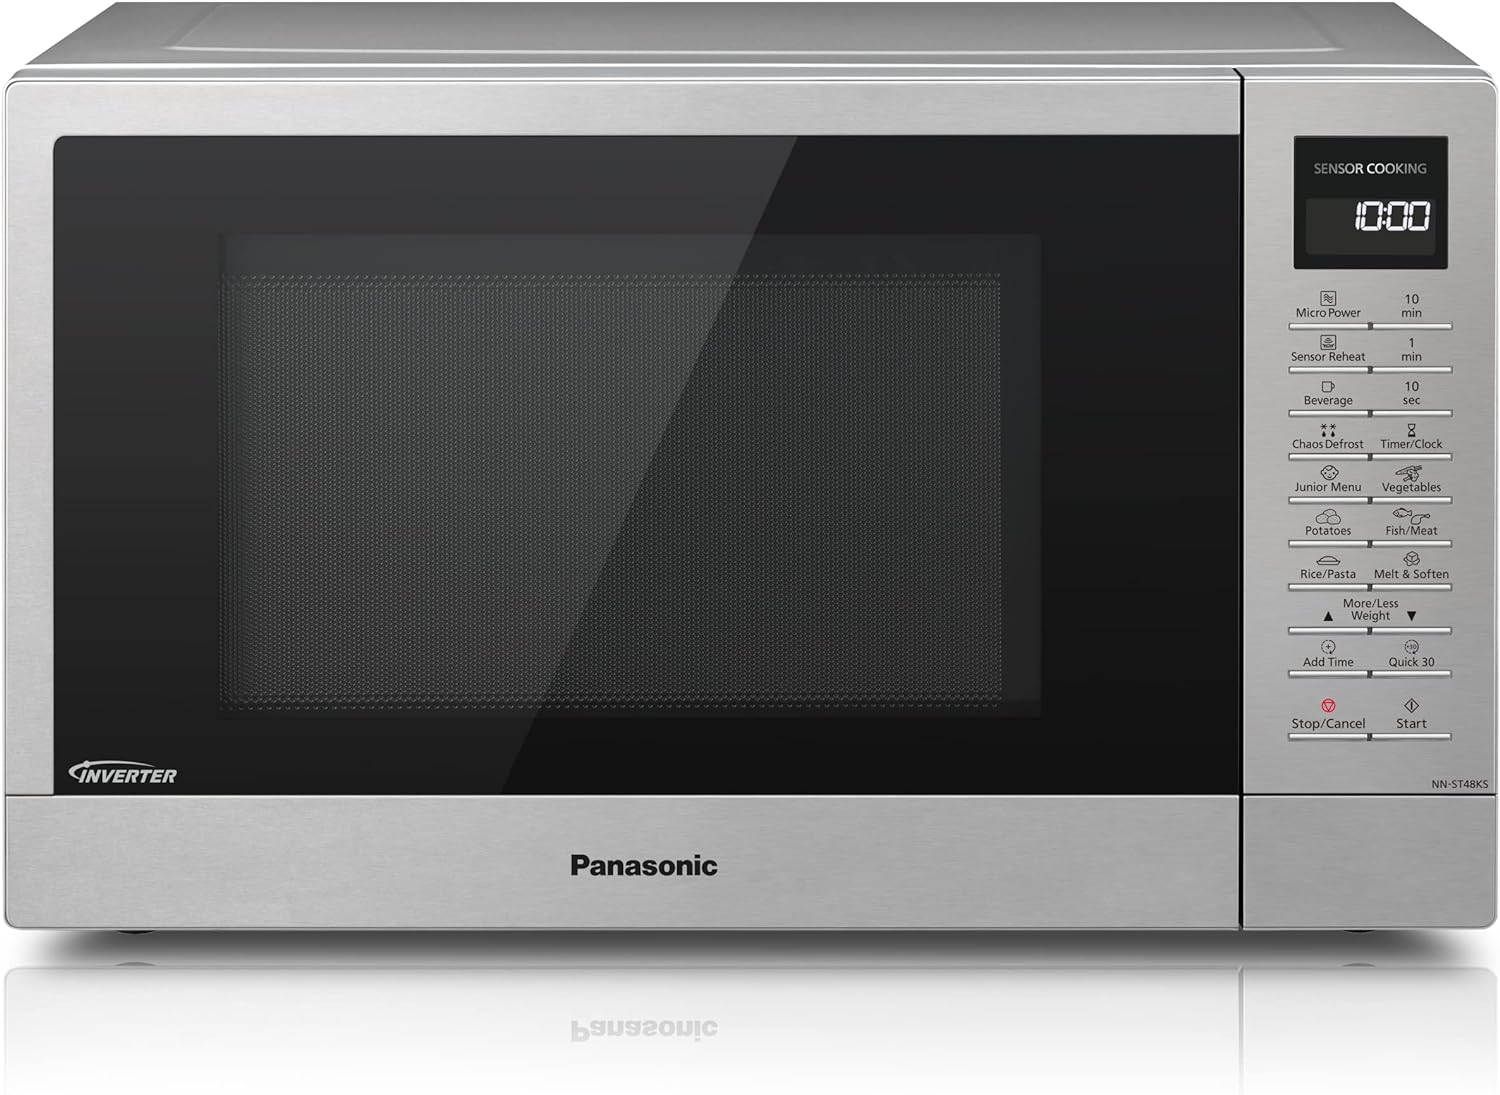 Panasonic NN-ST48KSBPQ Microwave Oven Review